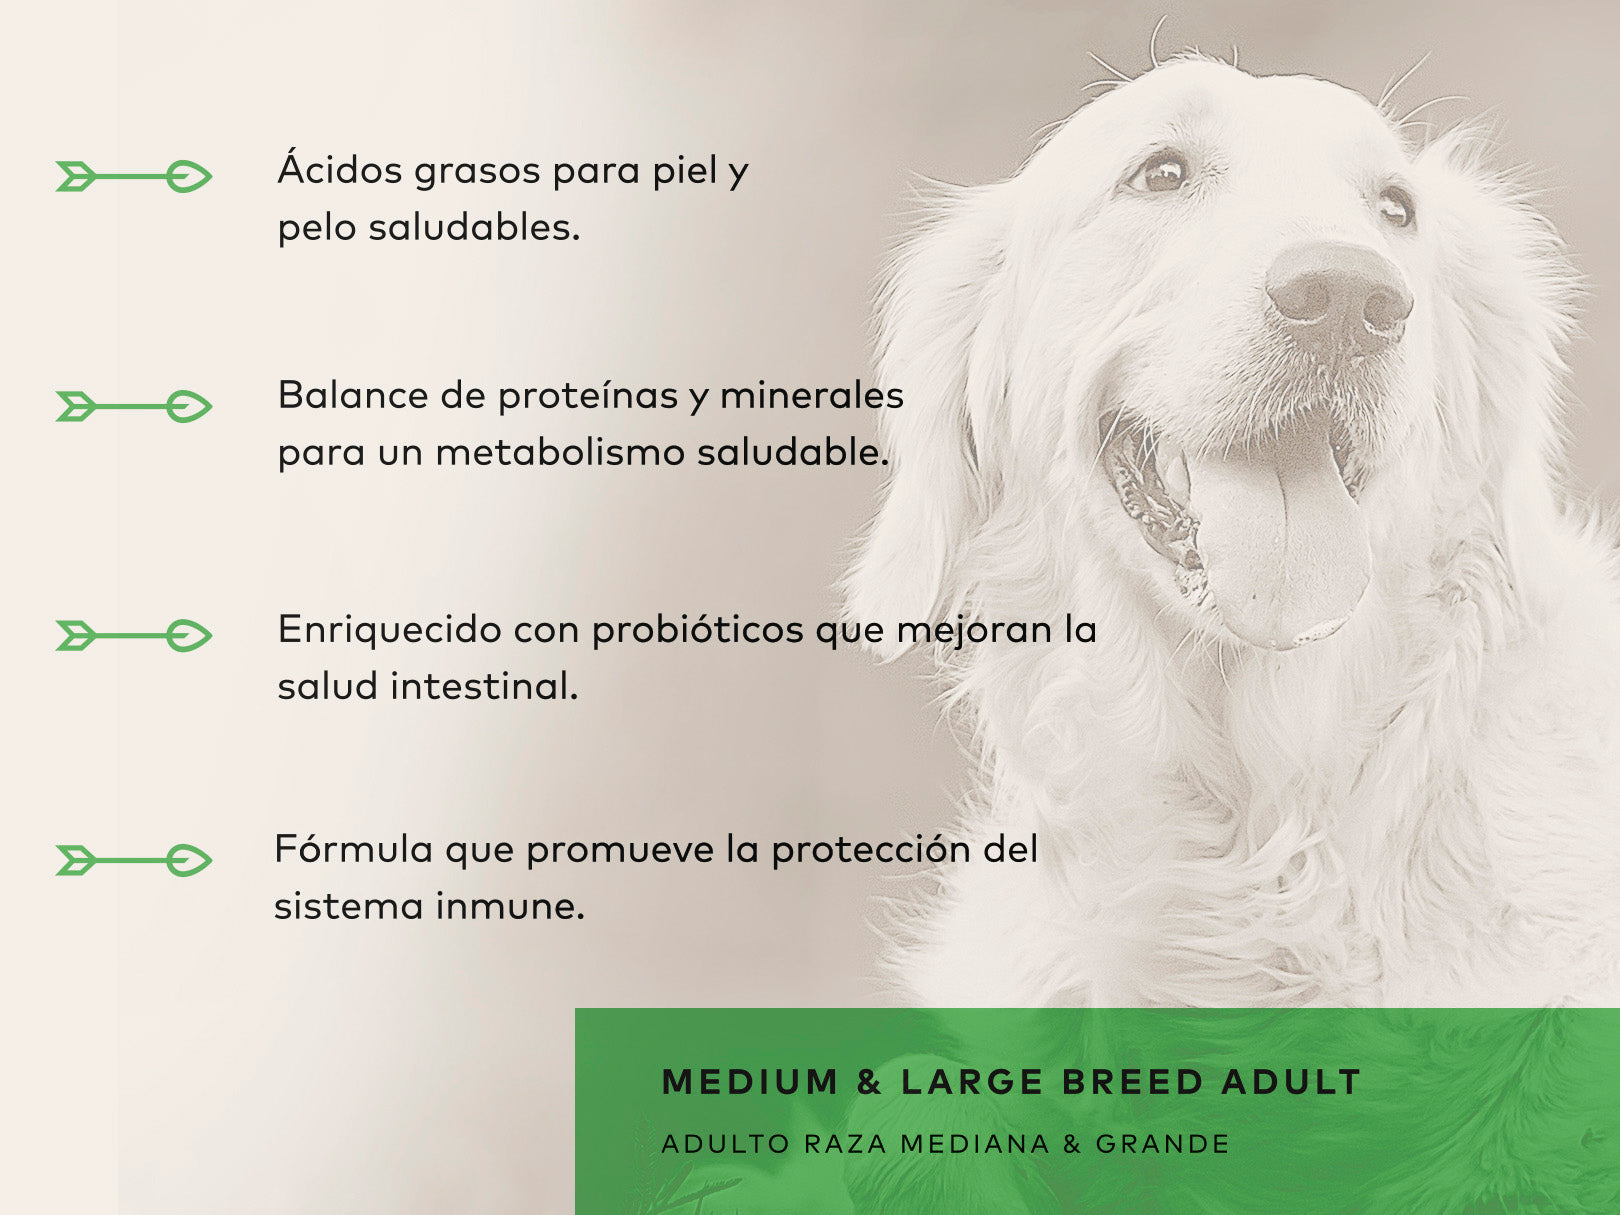 Back 2 Nature Adulto Razas Medianas y Grandes - Alimento Holistico para Perro, perro, Back 2 Nature, Mister Mascotas